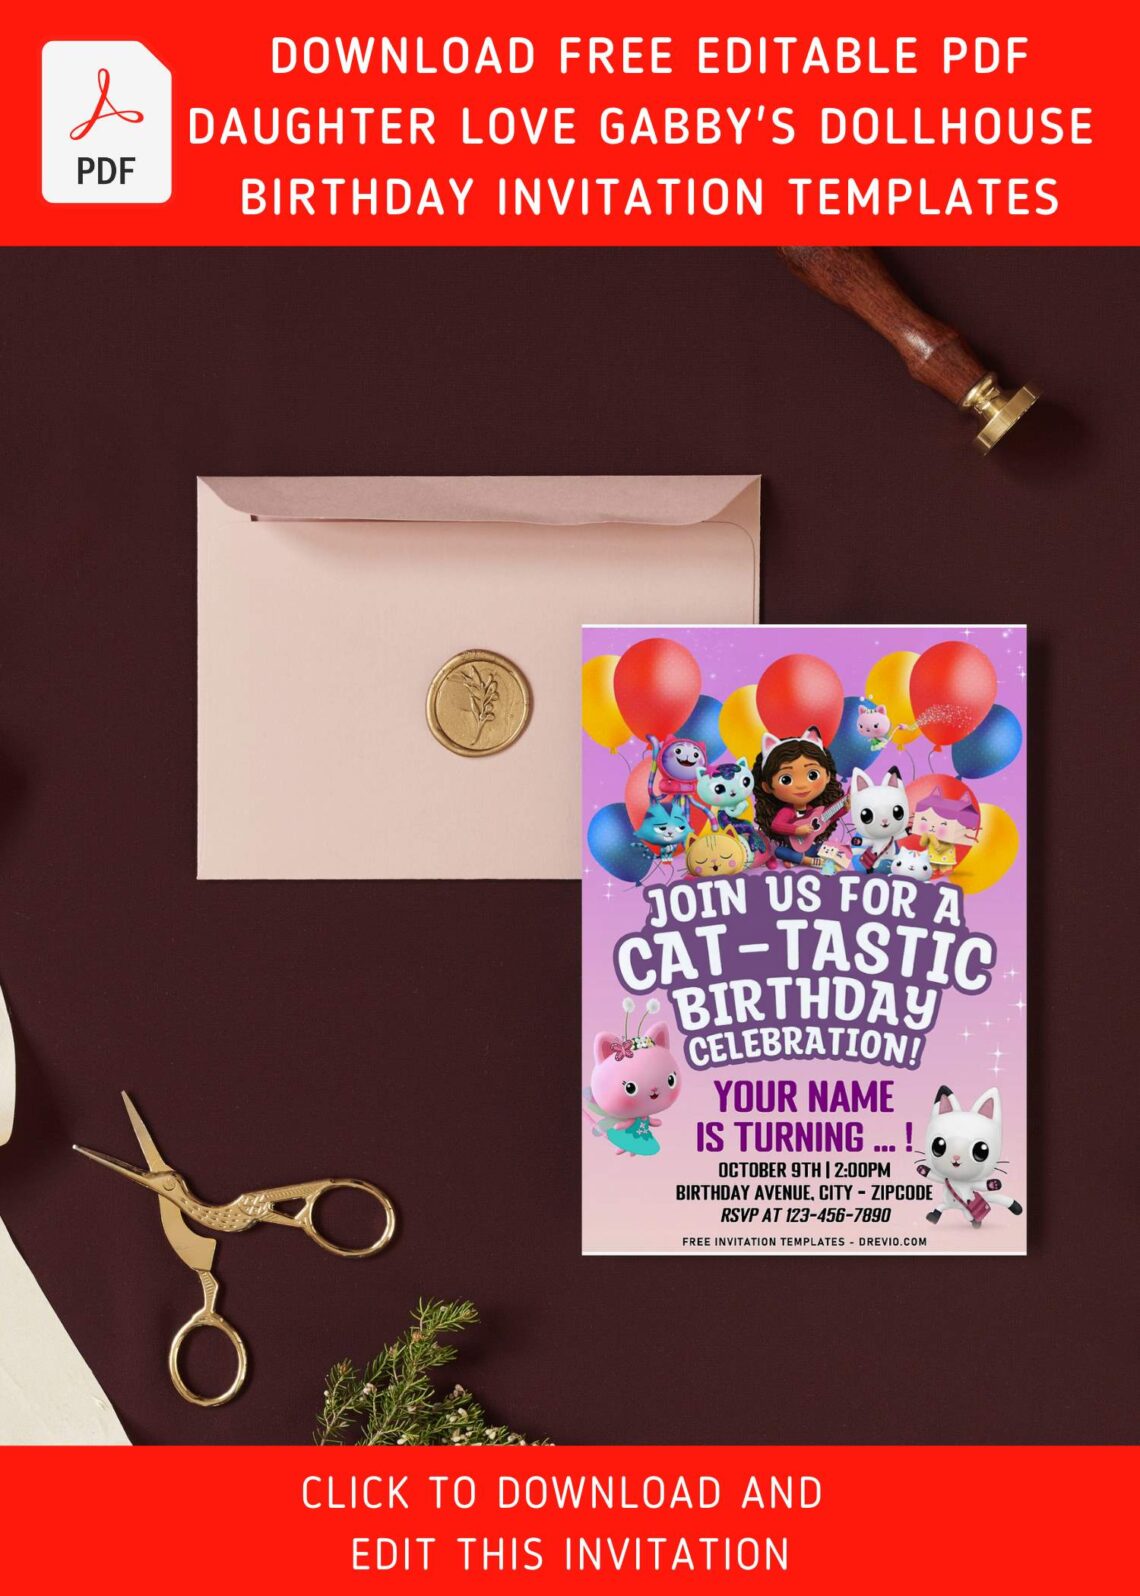 (Free Editable PDF) CAT-TASTIC Gabby's Dollhouse Birthday Invitation Templates with cute wording